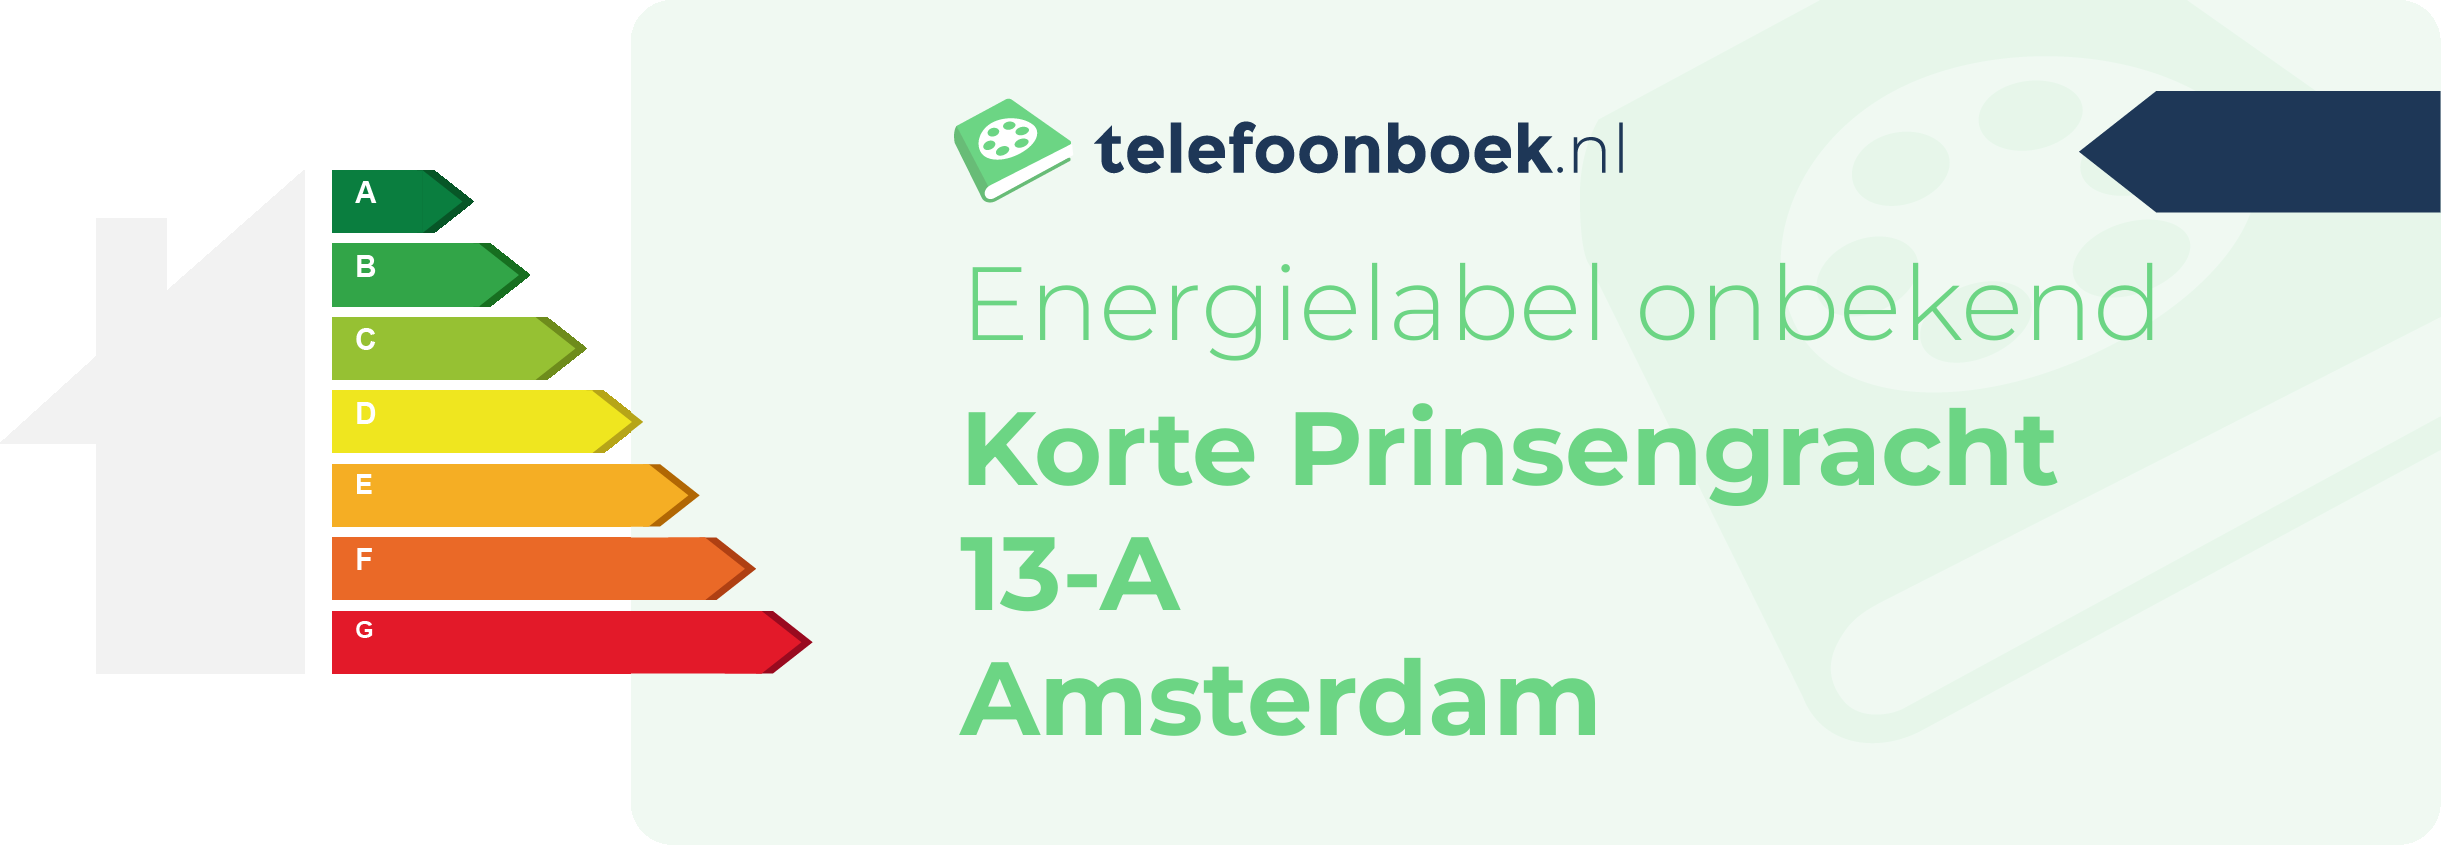 Energielabel Korte Prinsengracht 13-A Amsterdam